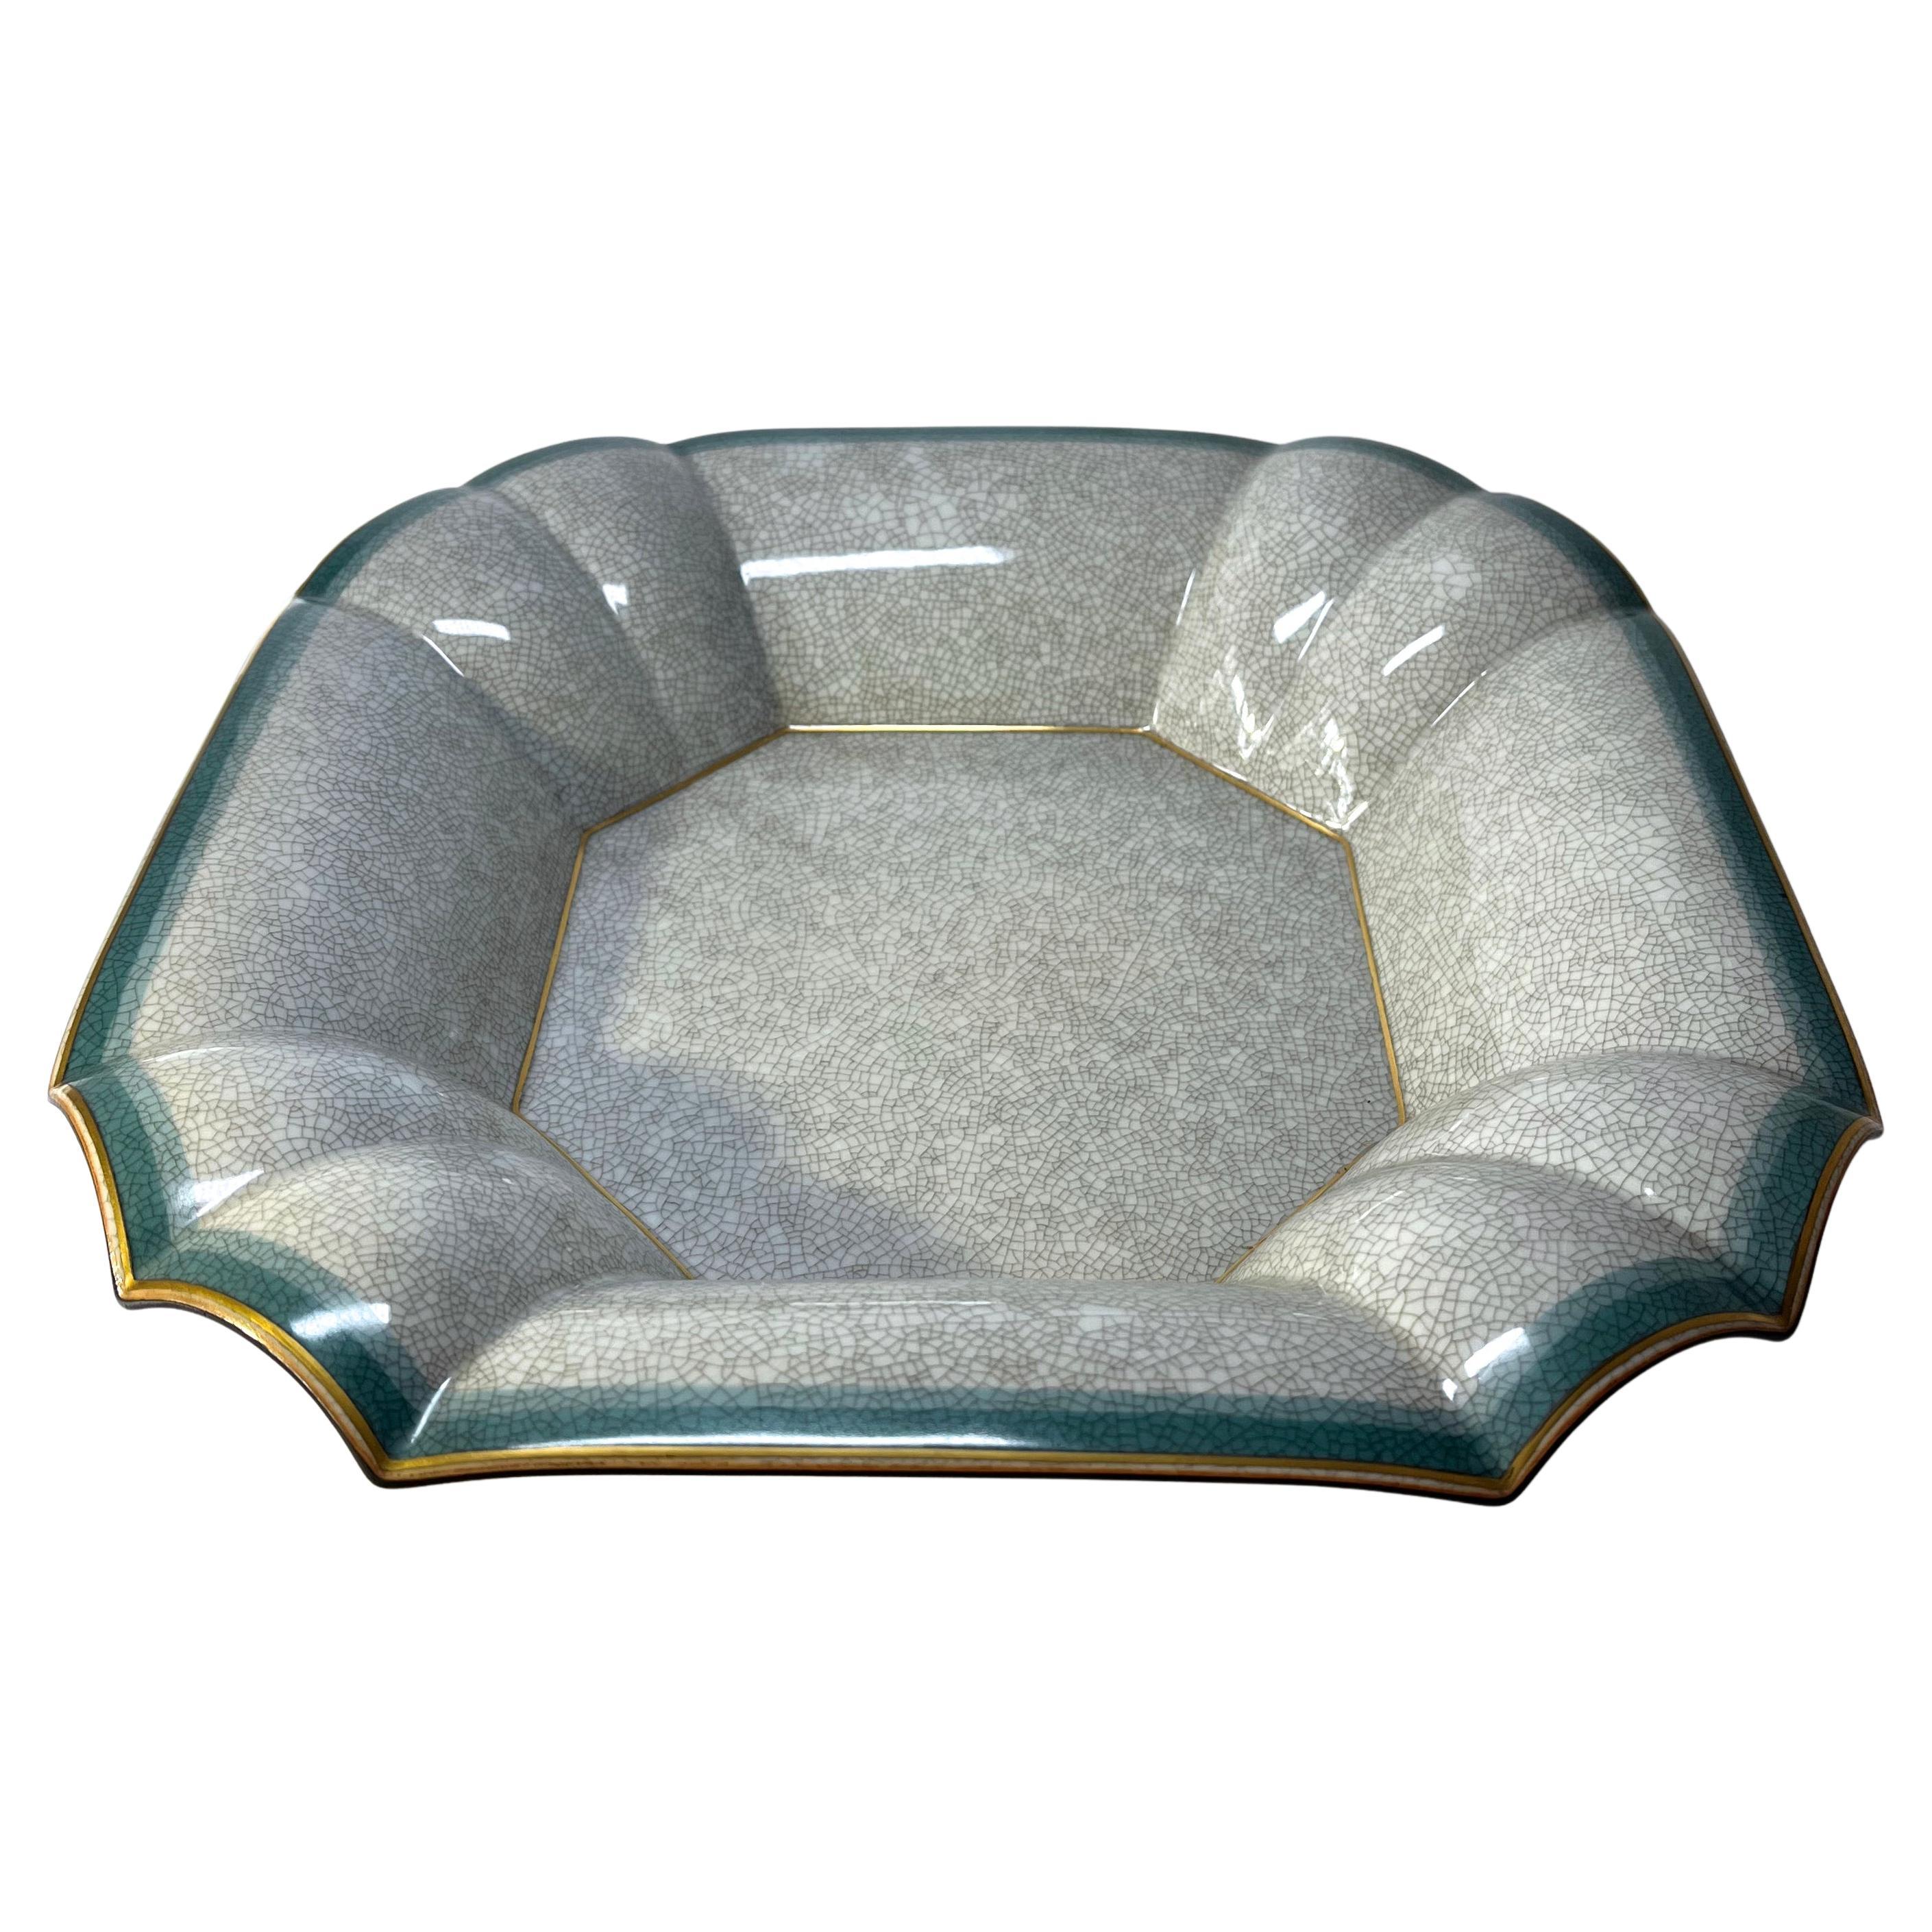 Thorkild Olsen Beautiful Tones Of Teal & Grey, Crackle Glazed Dual Purpose Bowl 